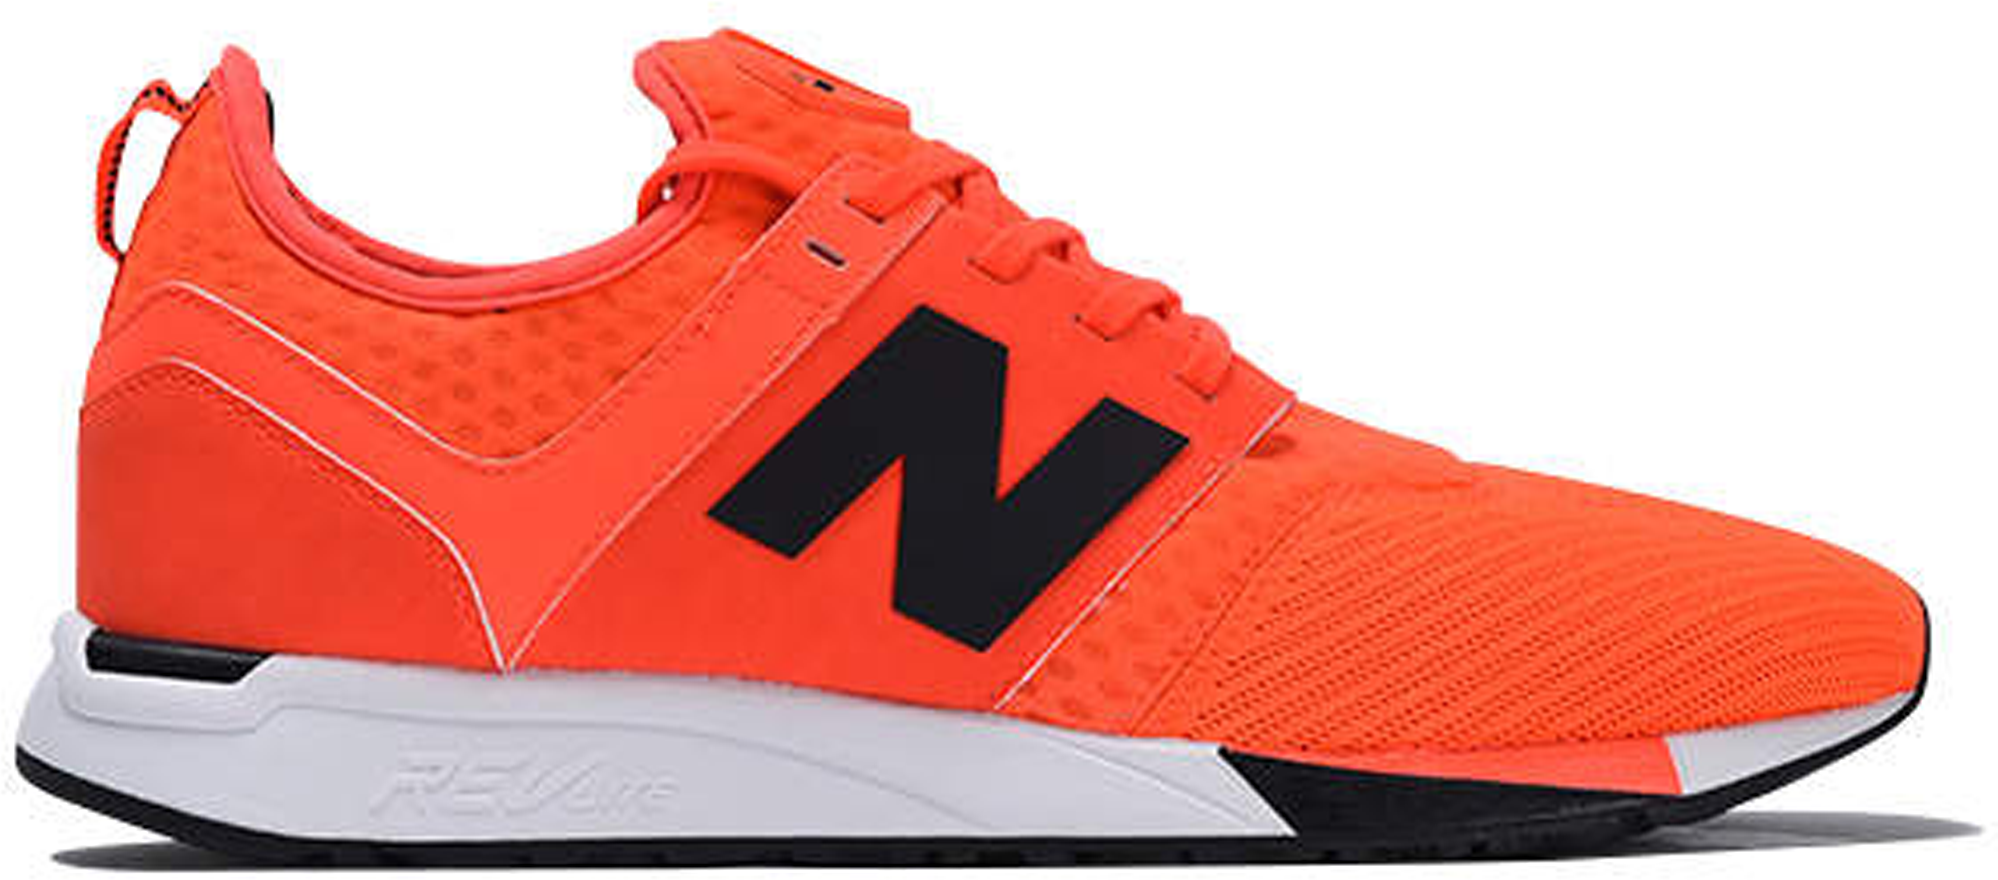 New Balance 247 Sport Orange - MRL247OR